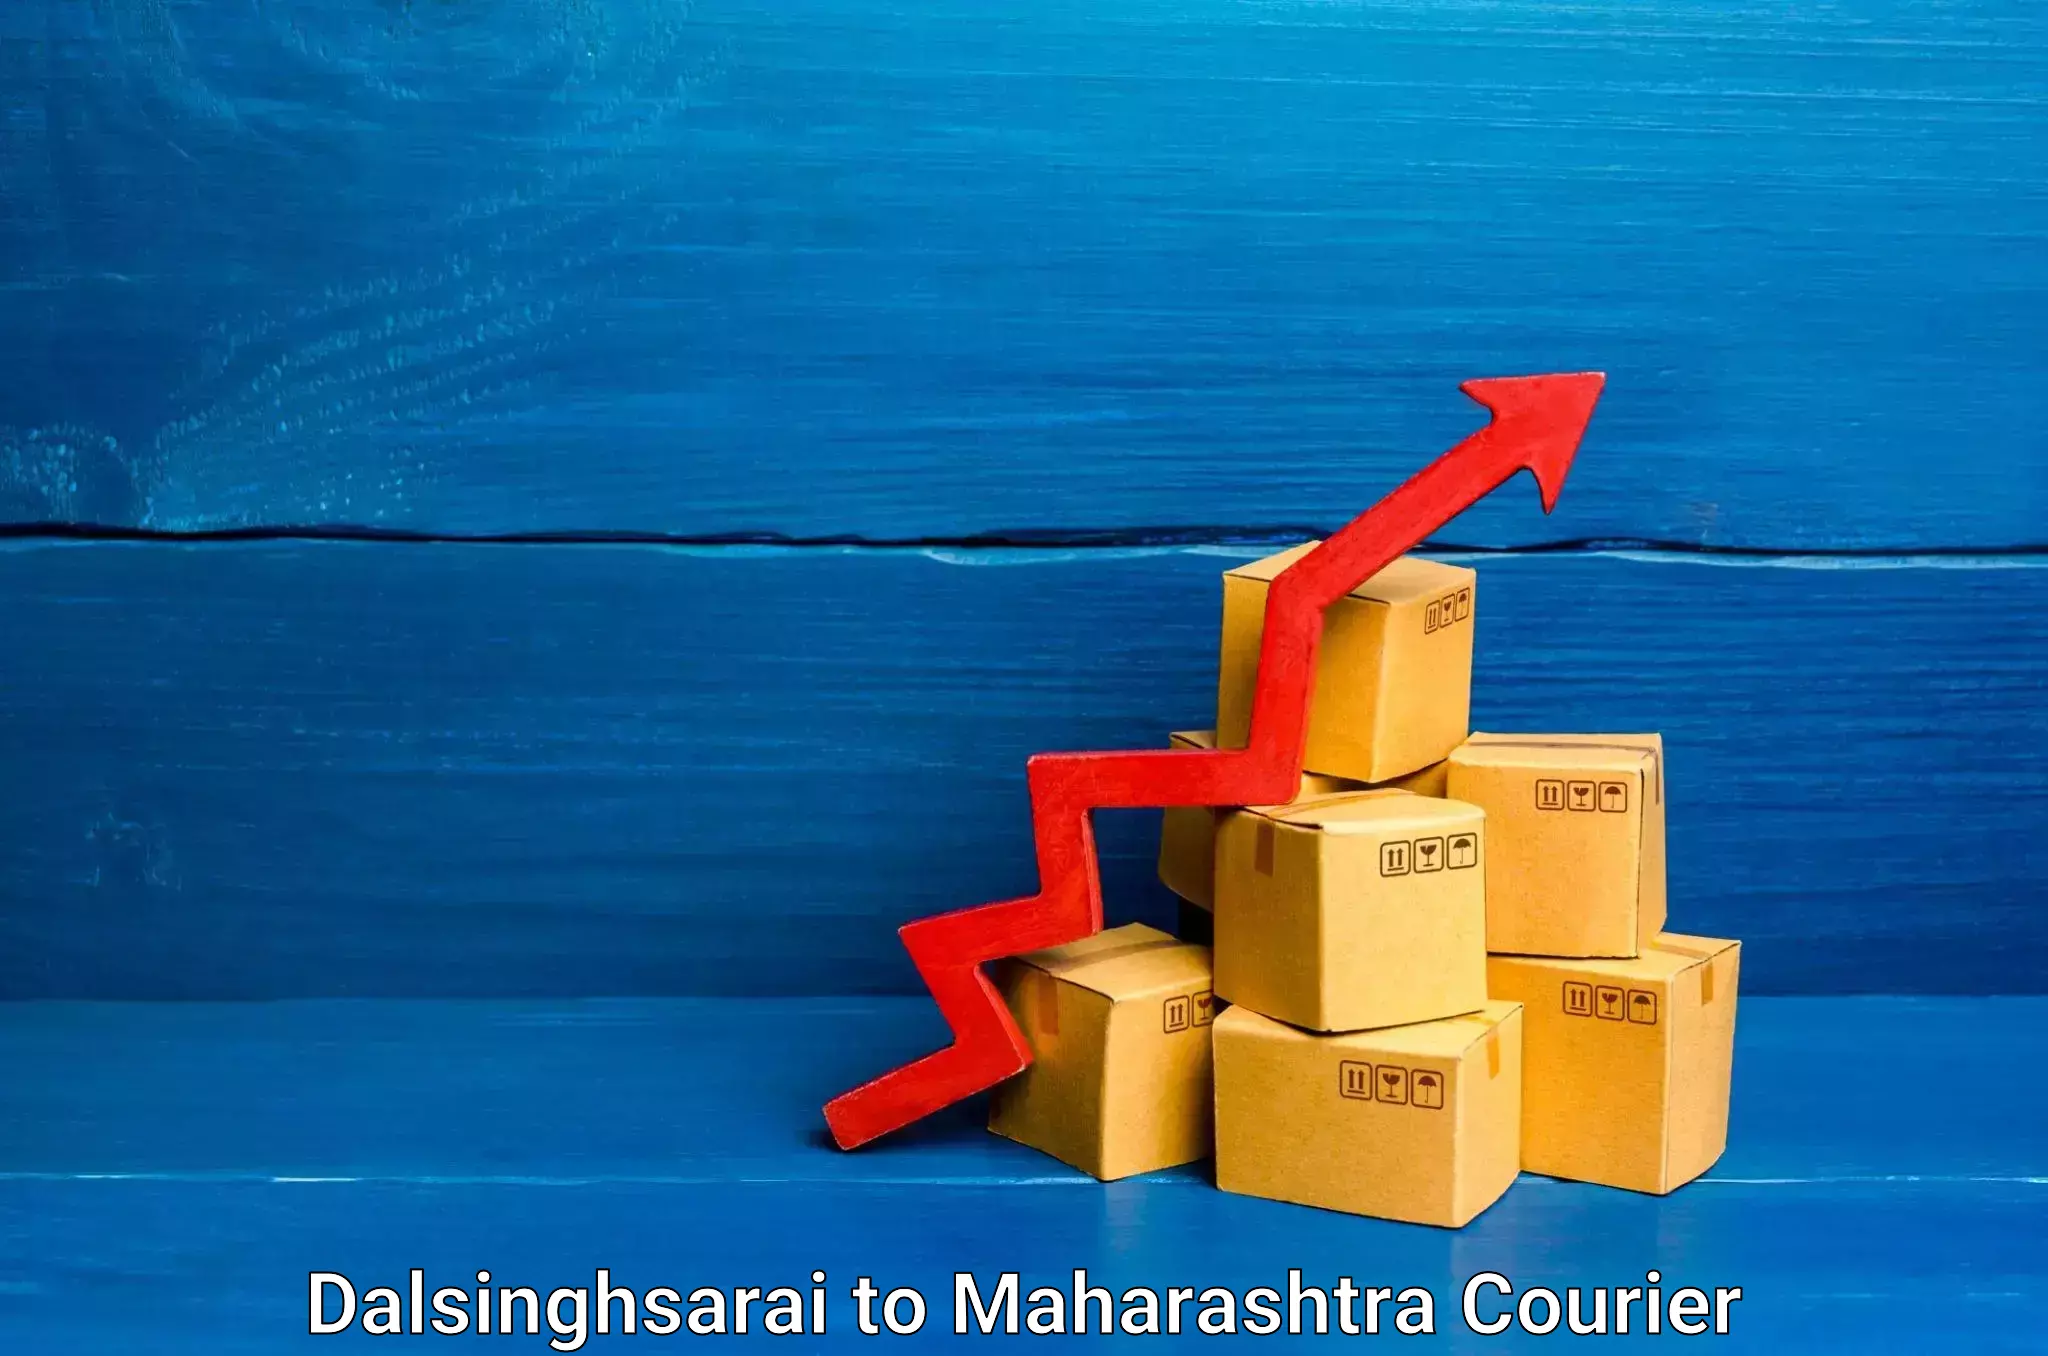 Furniture delivery service Dalsinghsarai to Maharashtra